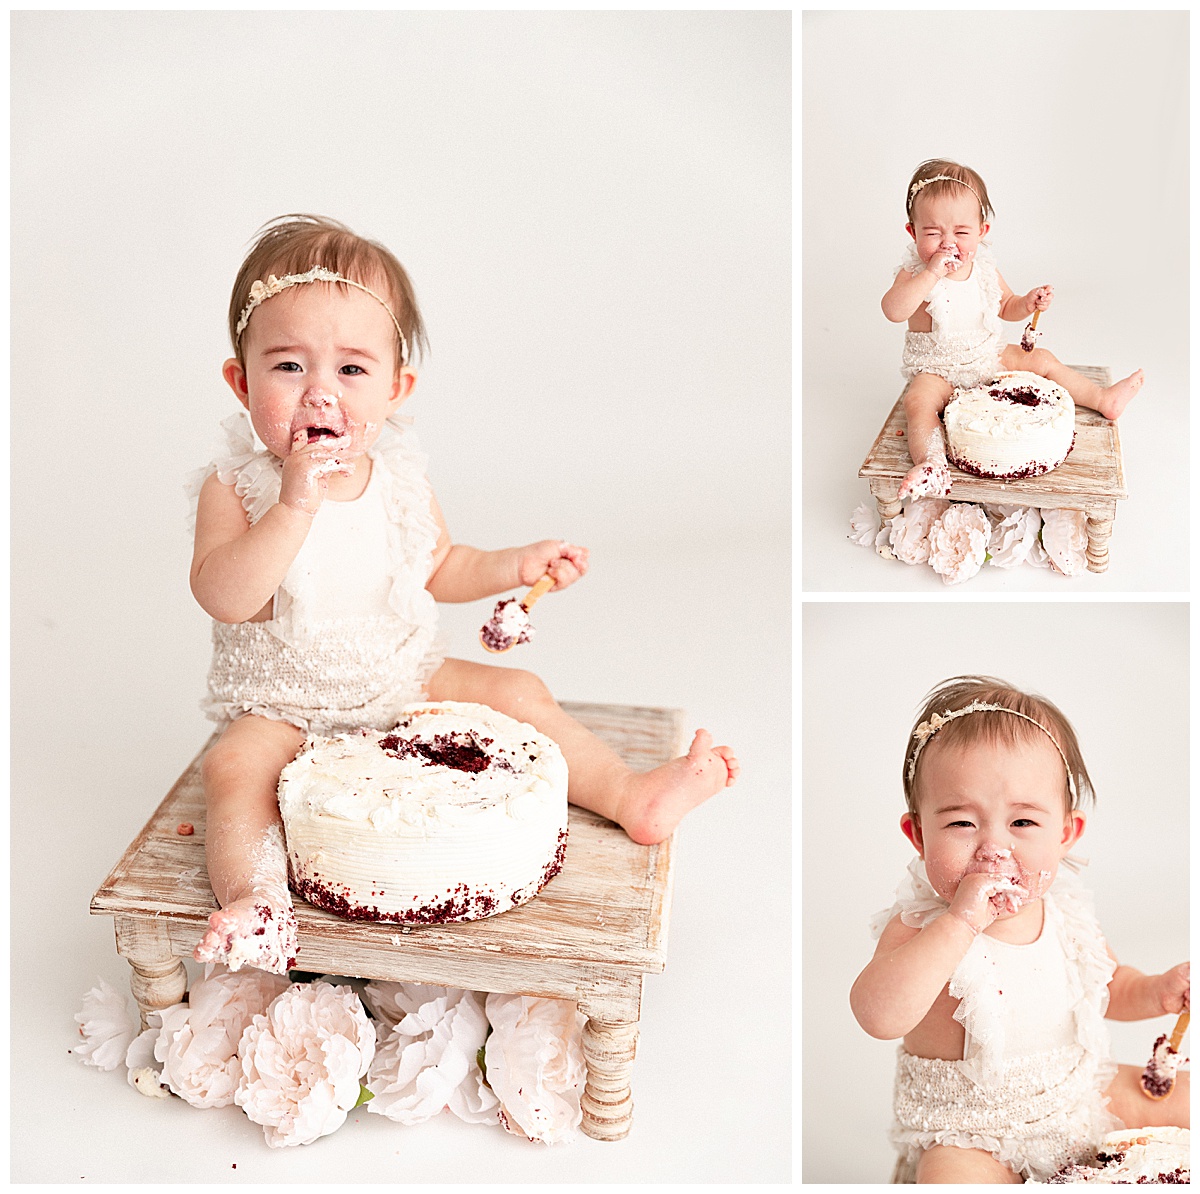 Baby enjoying cake for First Birthday Cake Smash